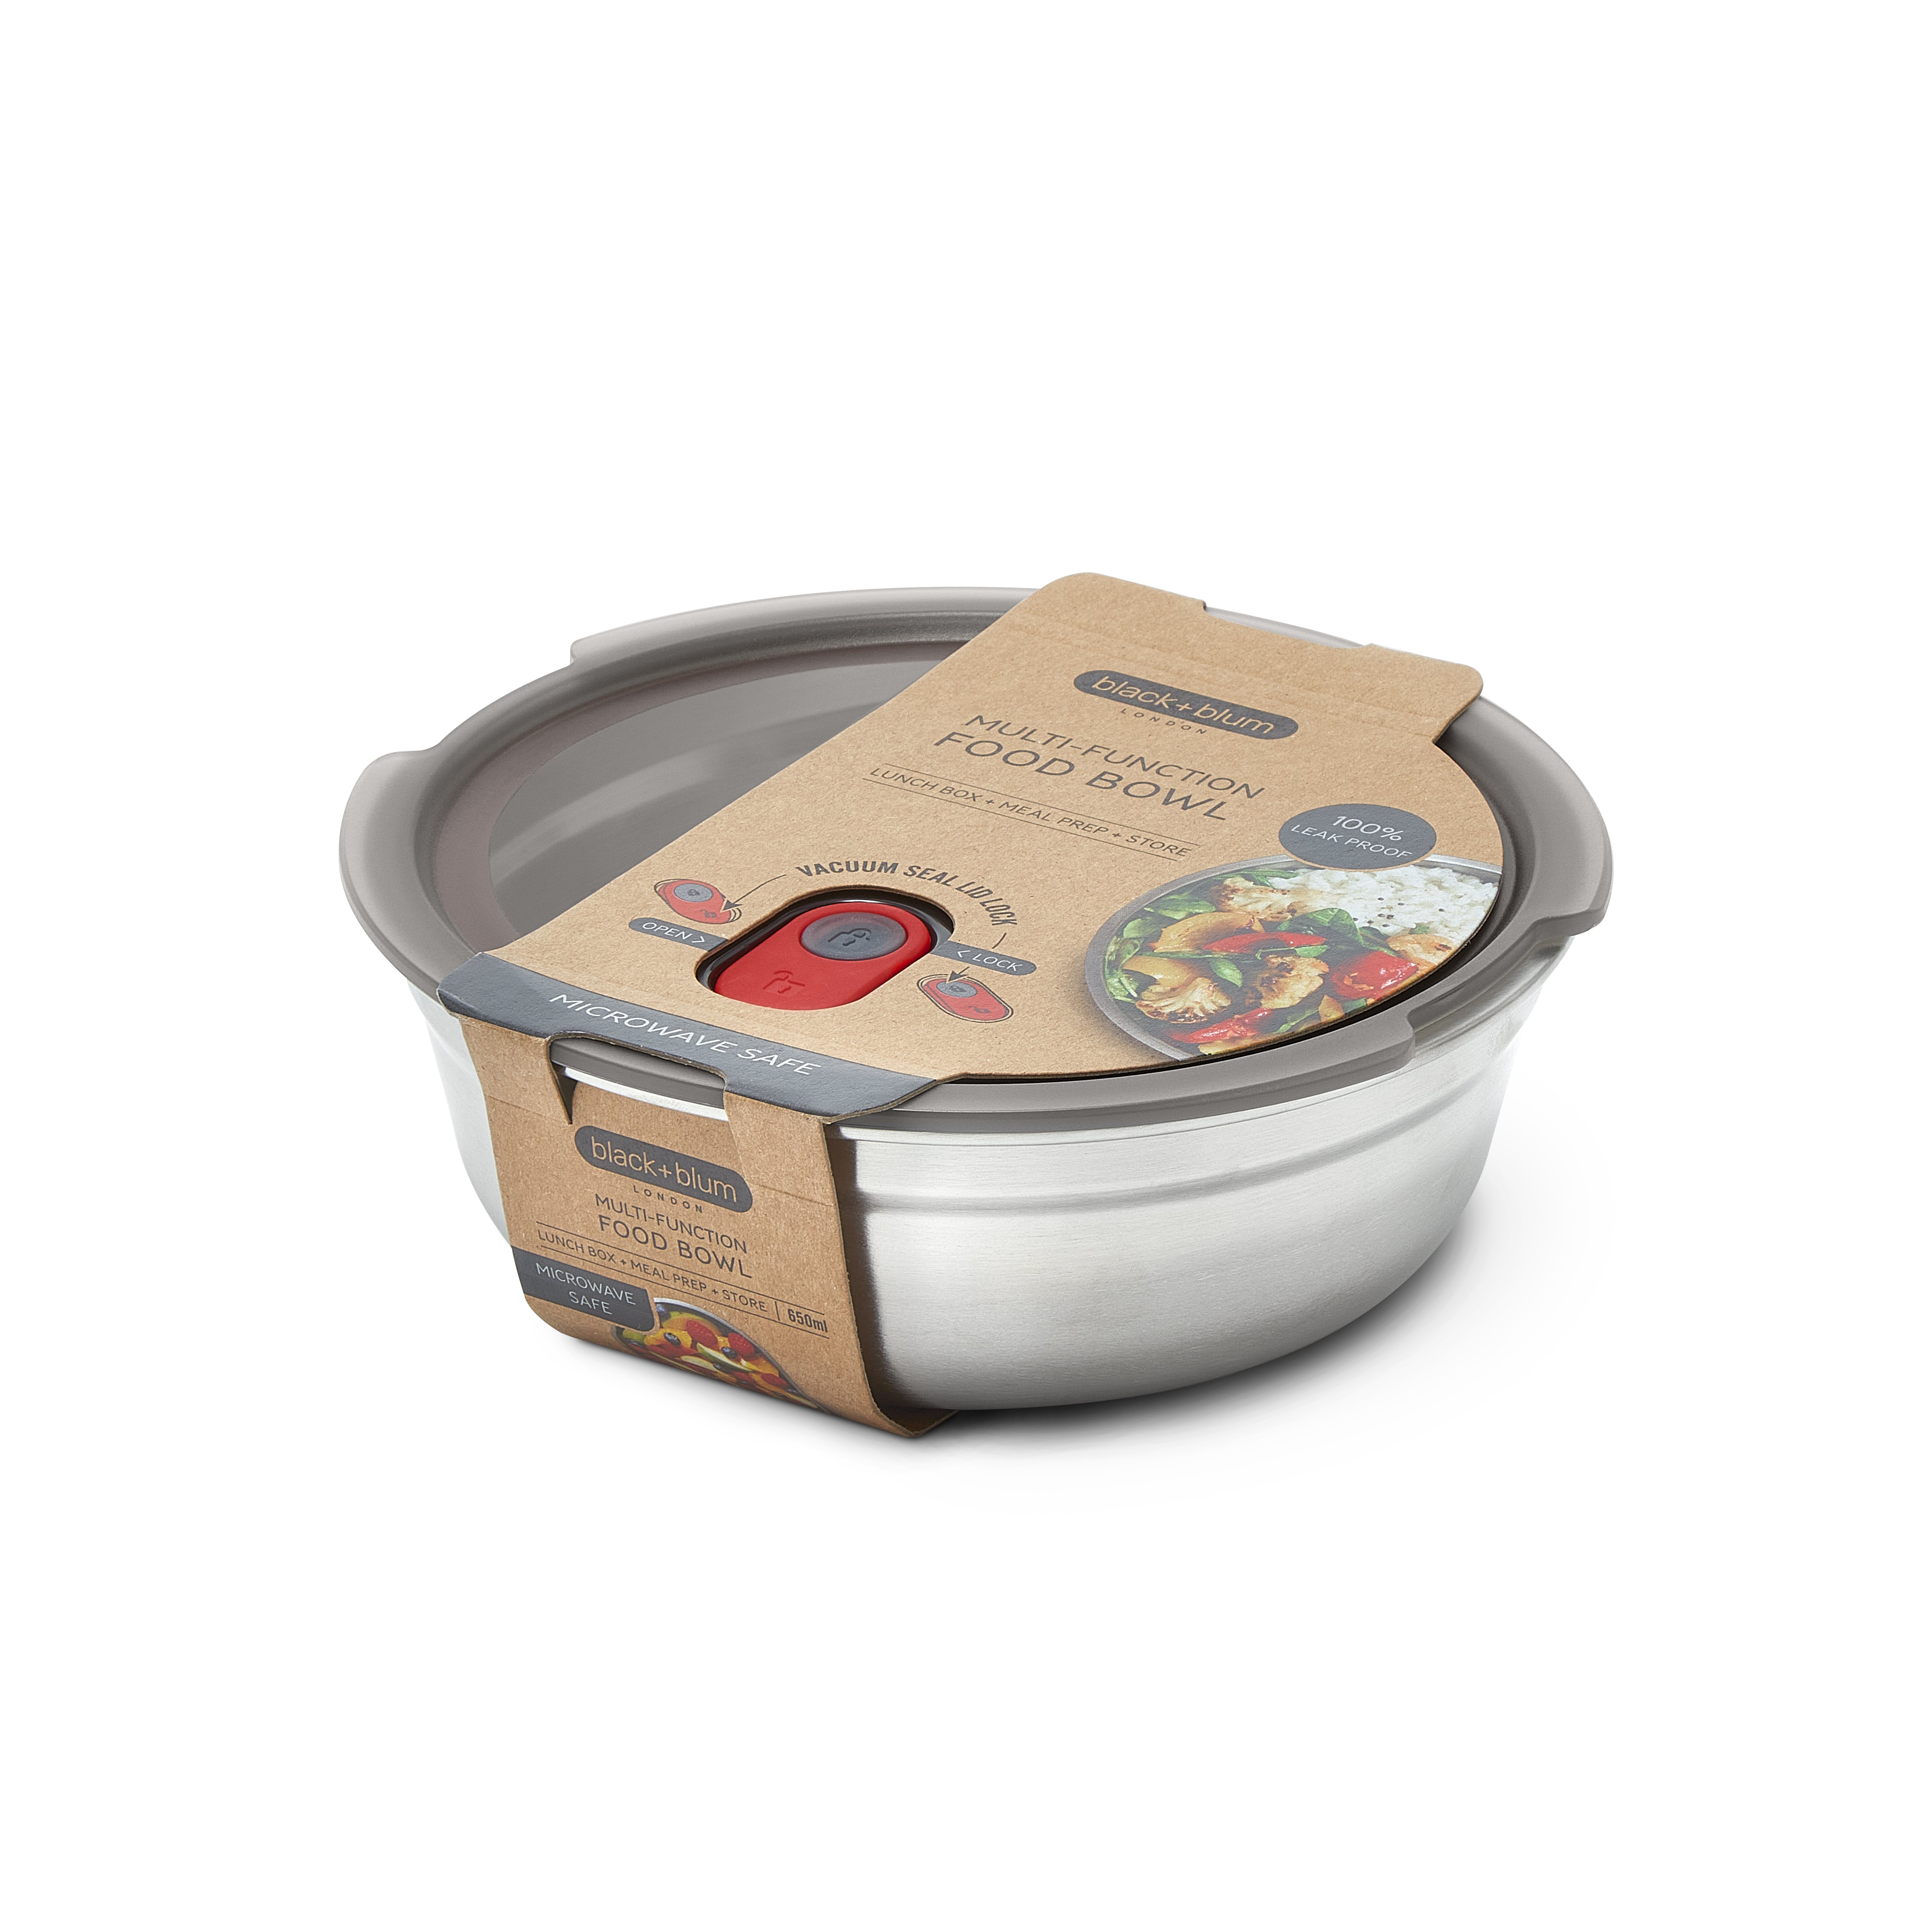 STEEL FOOD BOWL Small - Lunchbox multifunktional (EN)